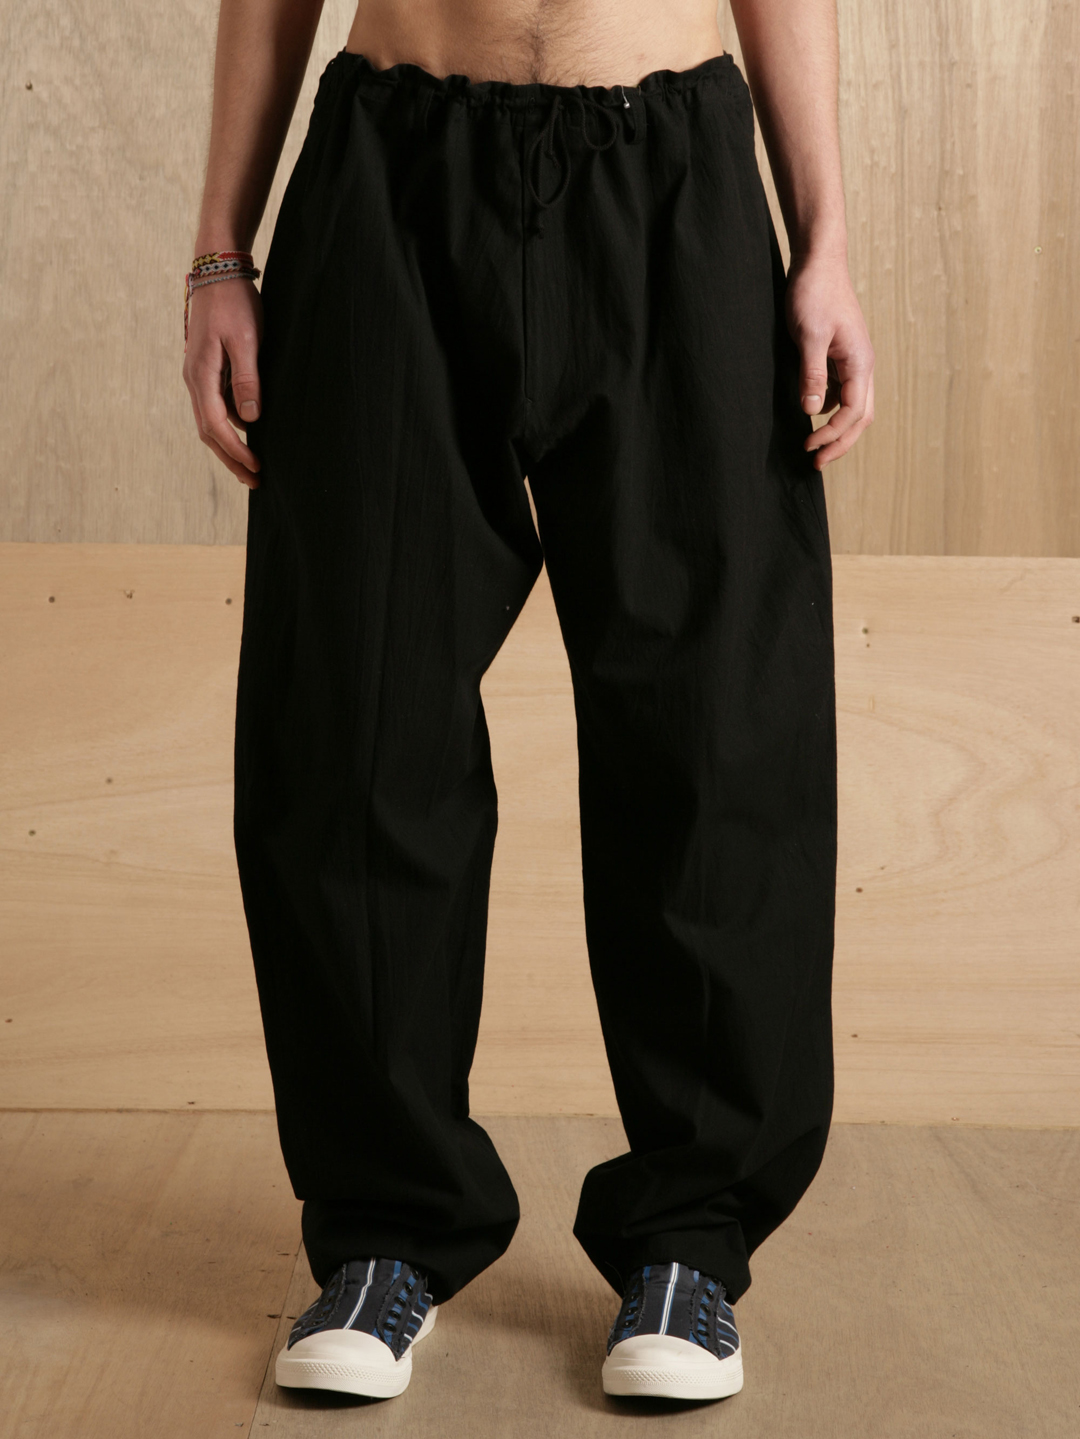 Lyst - Yohji Yamamoto Yohji Yamamoto Mens Side Elastic String Pants in ...